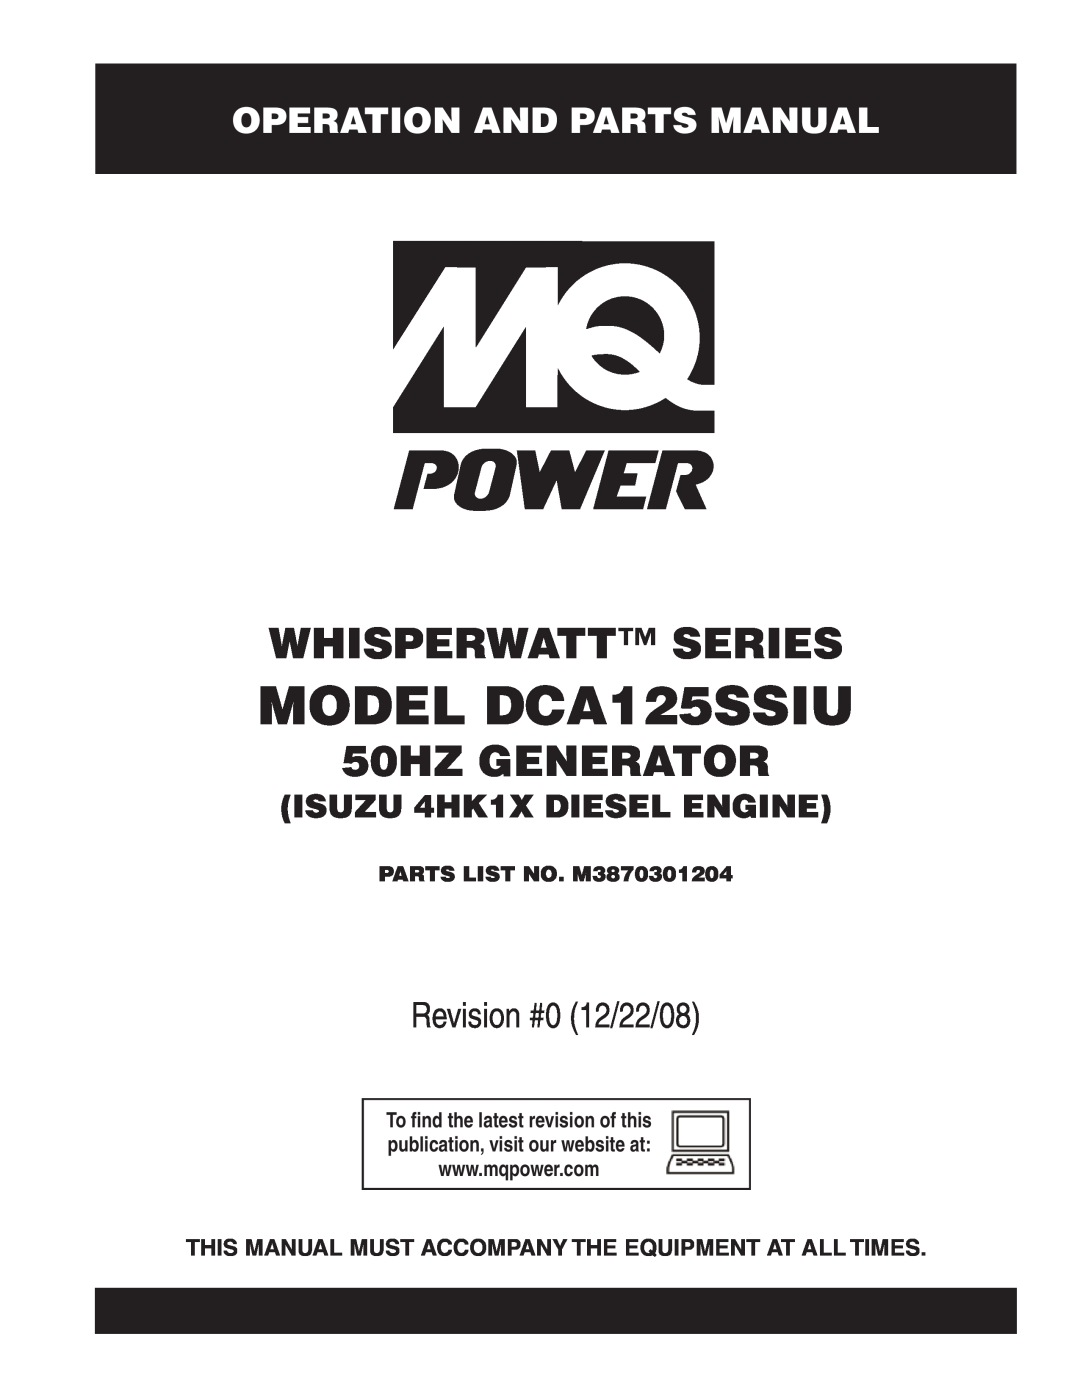 Multiquip manual Operation And Parts Manual, PARTS LIST NO. M3870301204, MODEL DCA125SSIU, Whisperwatt Series 